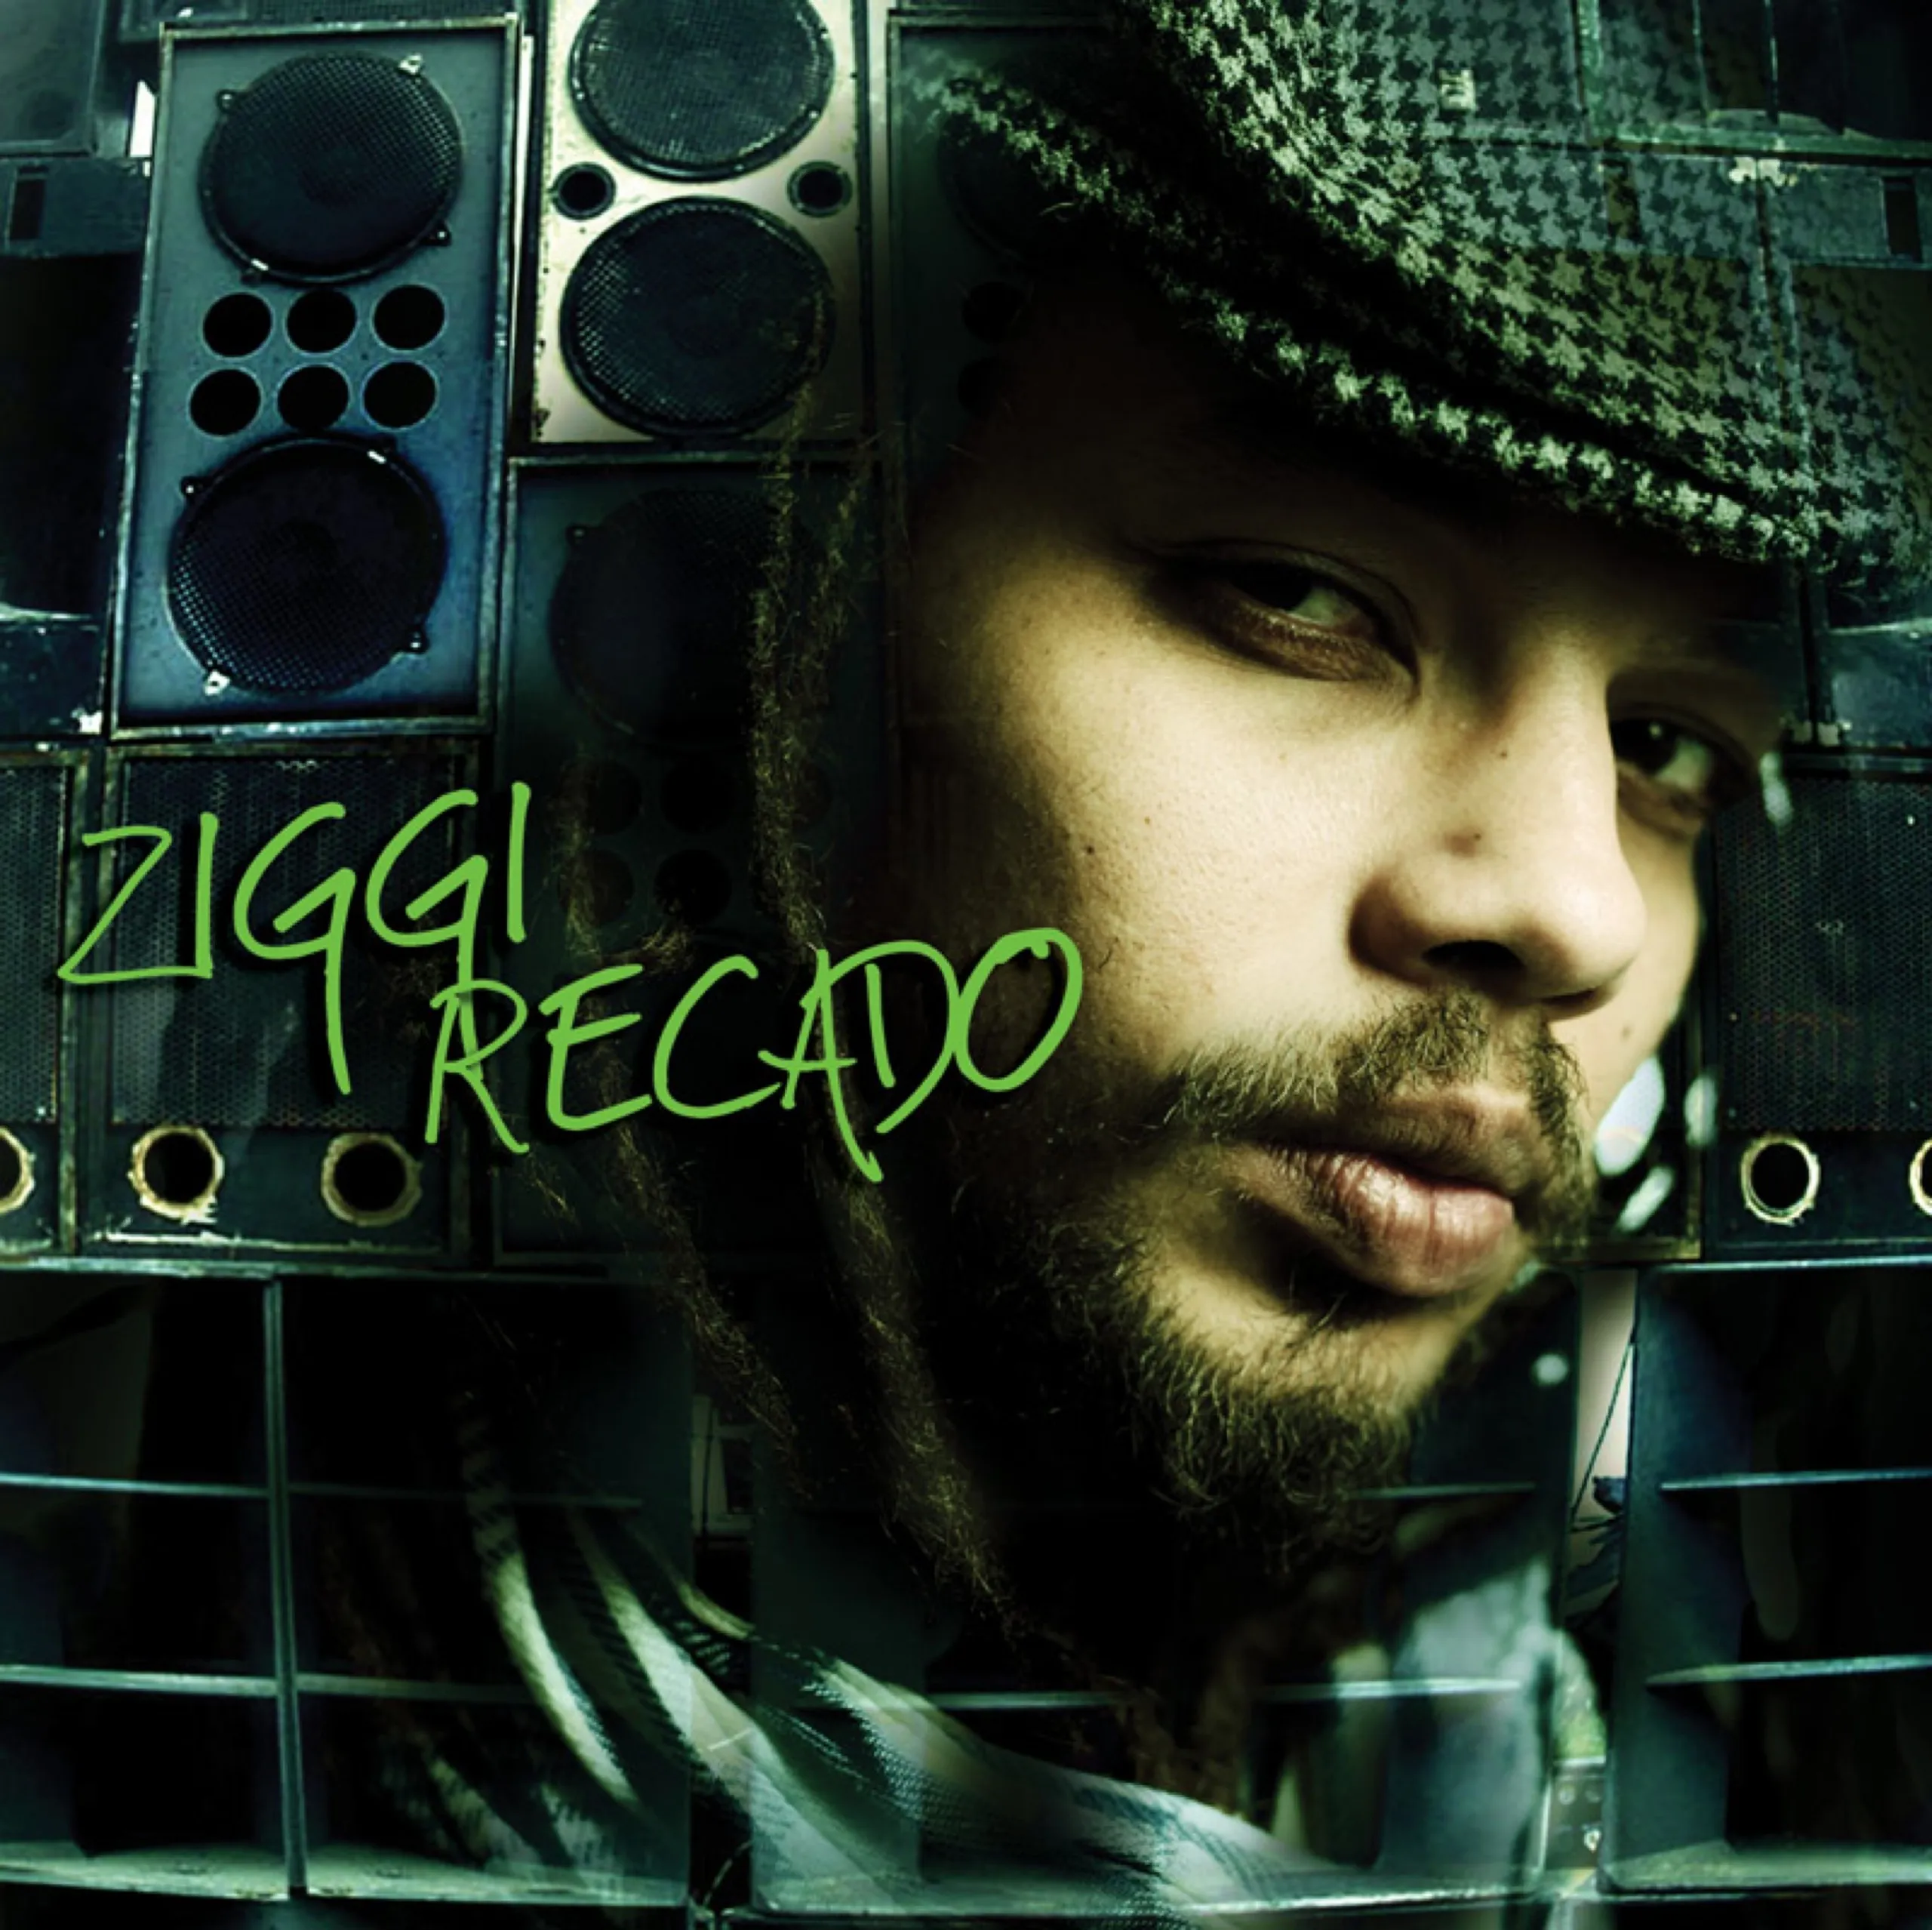 Ziggi Recado Album Cover scaled